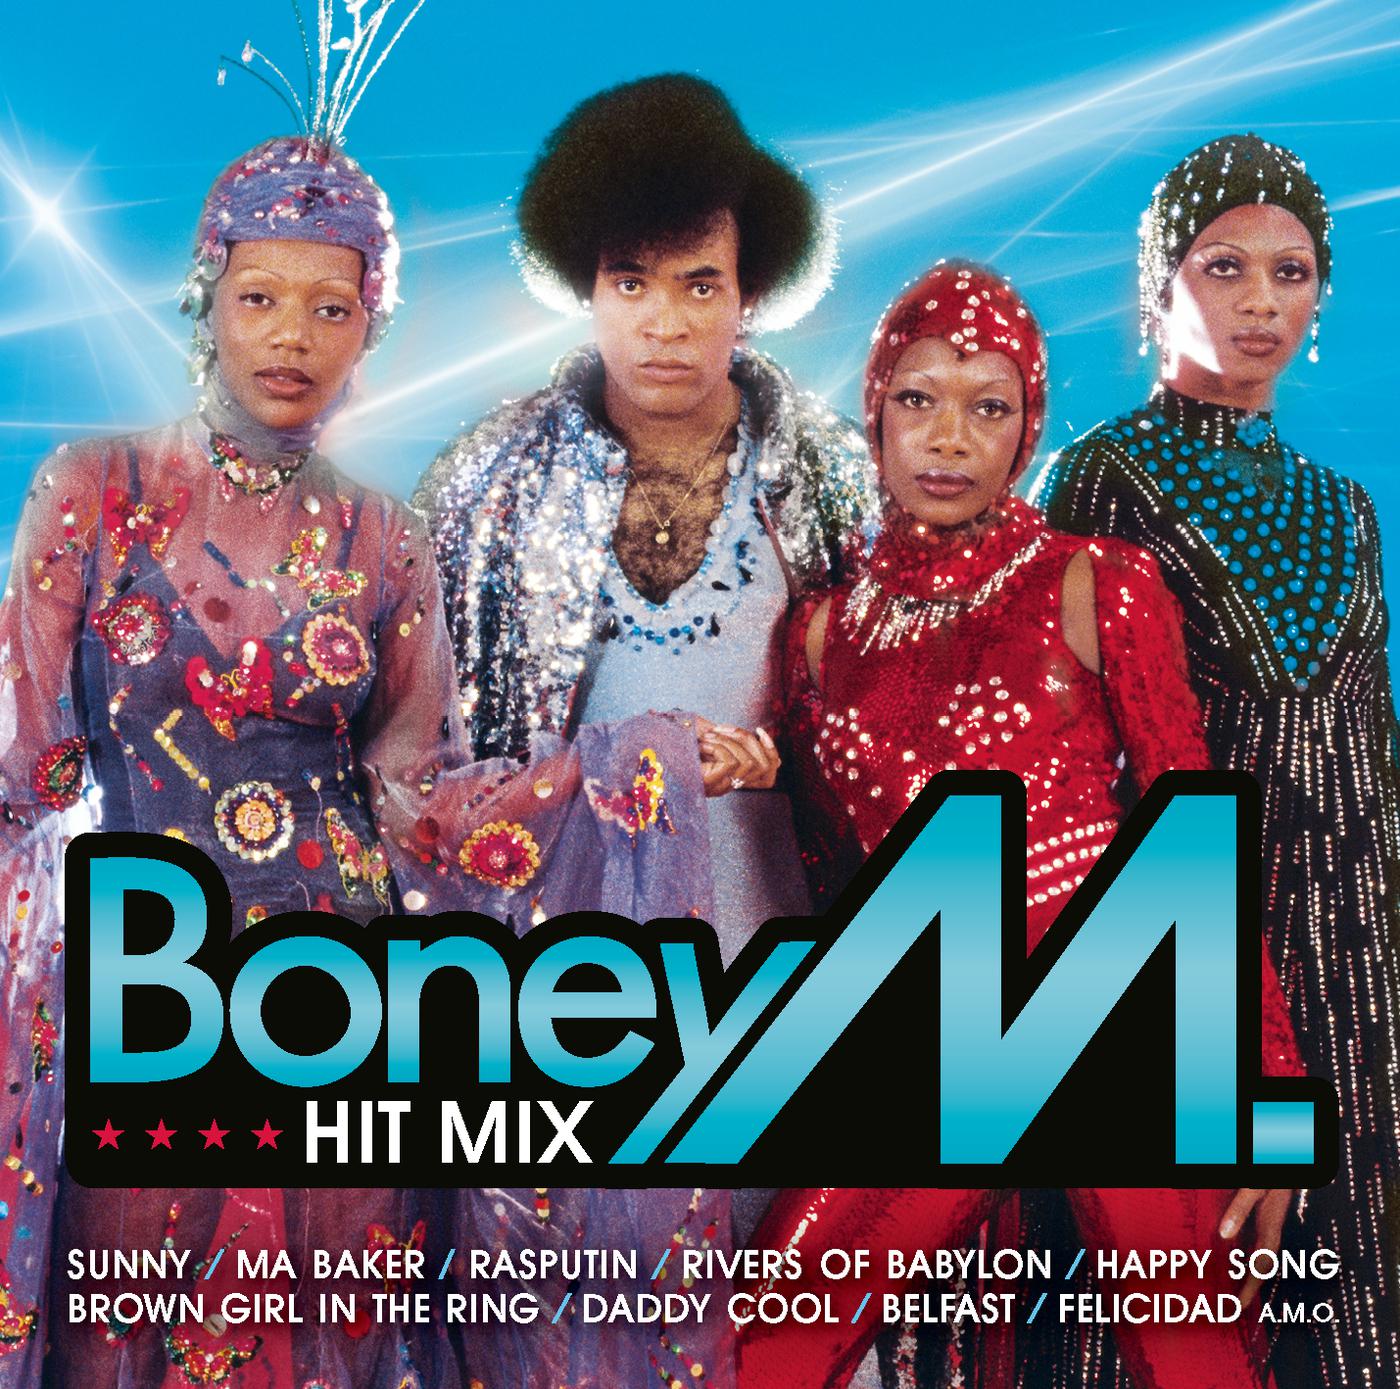 Boney m kalimba de. Группа Бони м. Группа Boney m. в 80. Состав группы Бони м 1977. Boney m обложка.